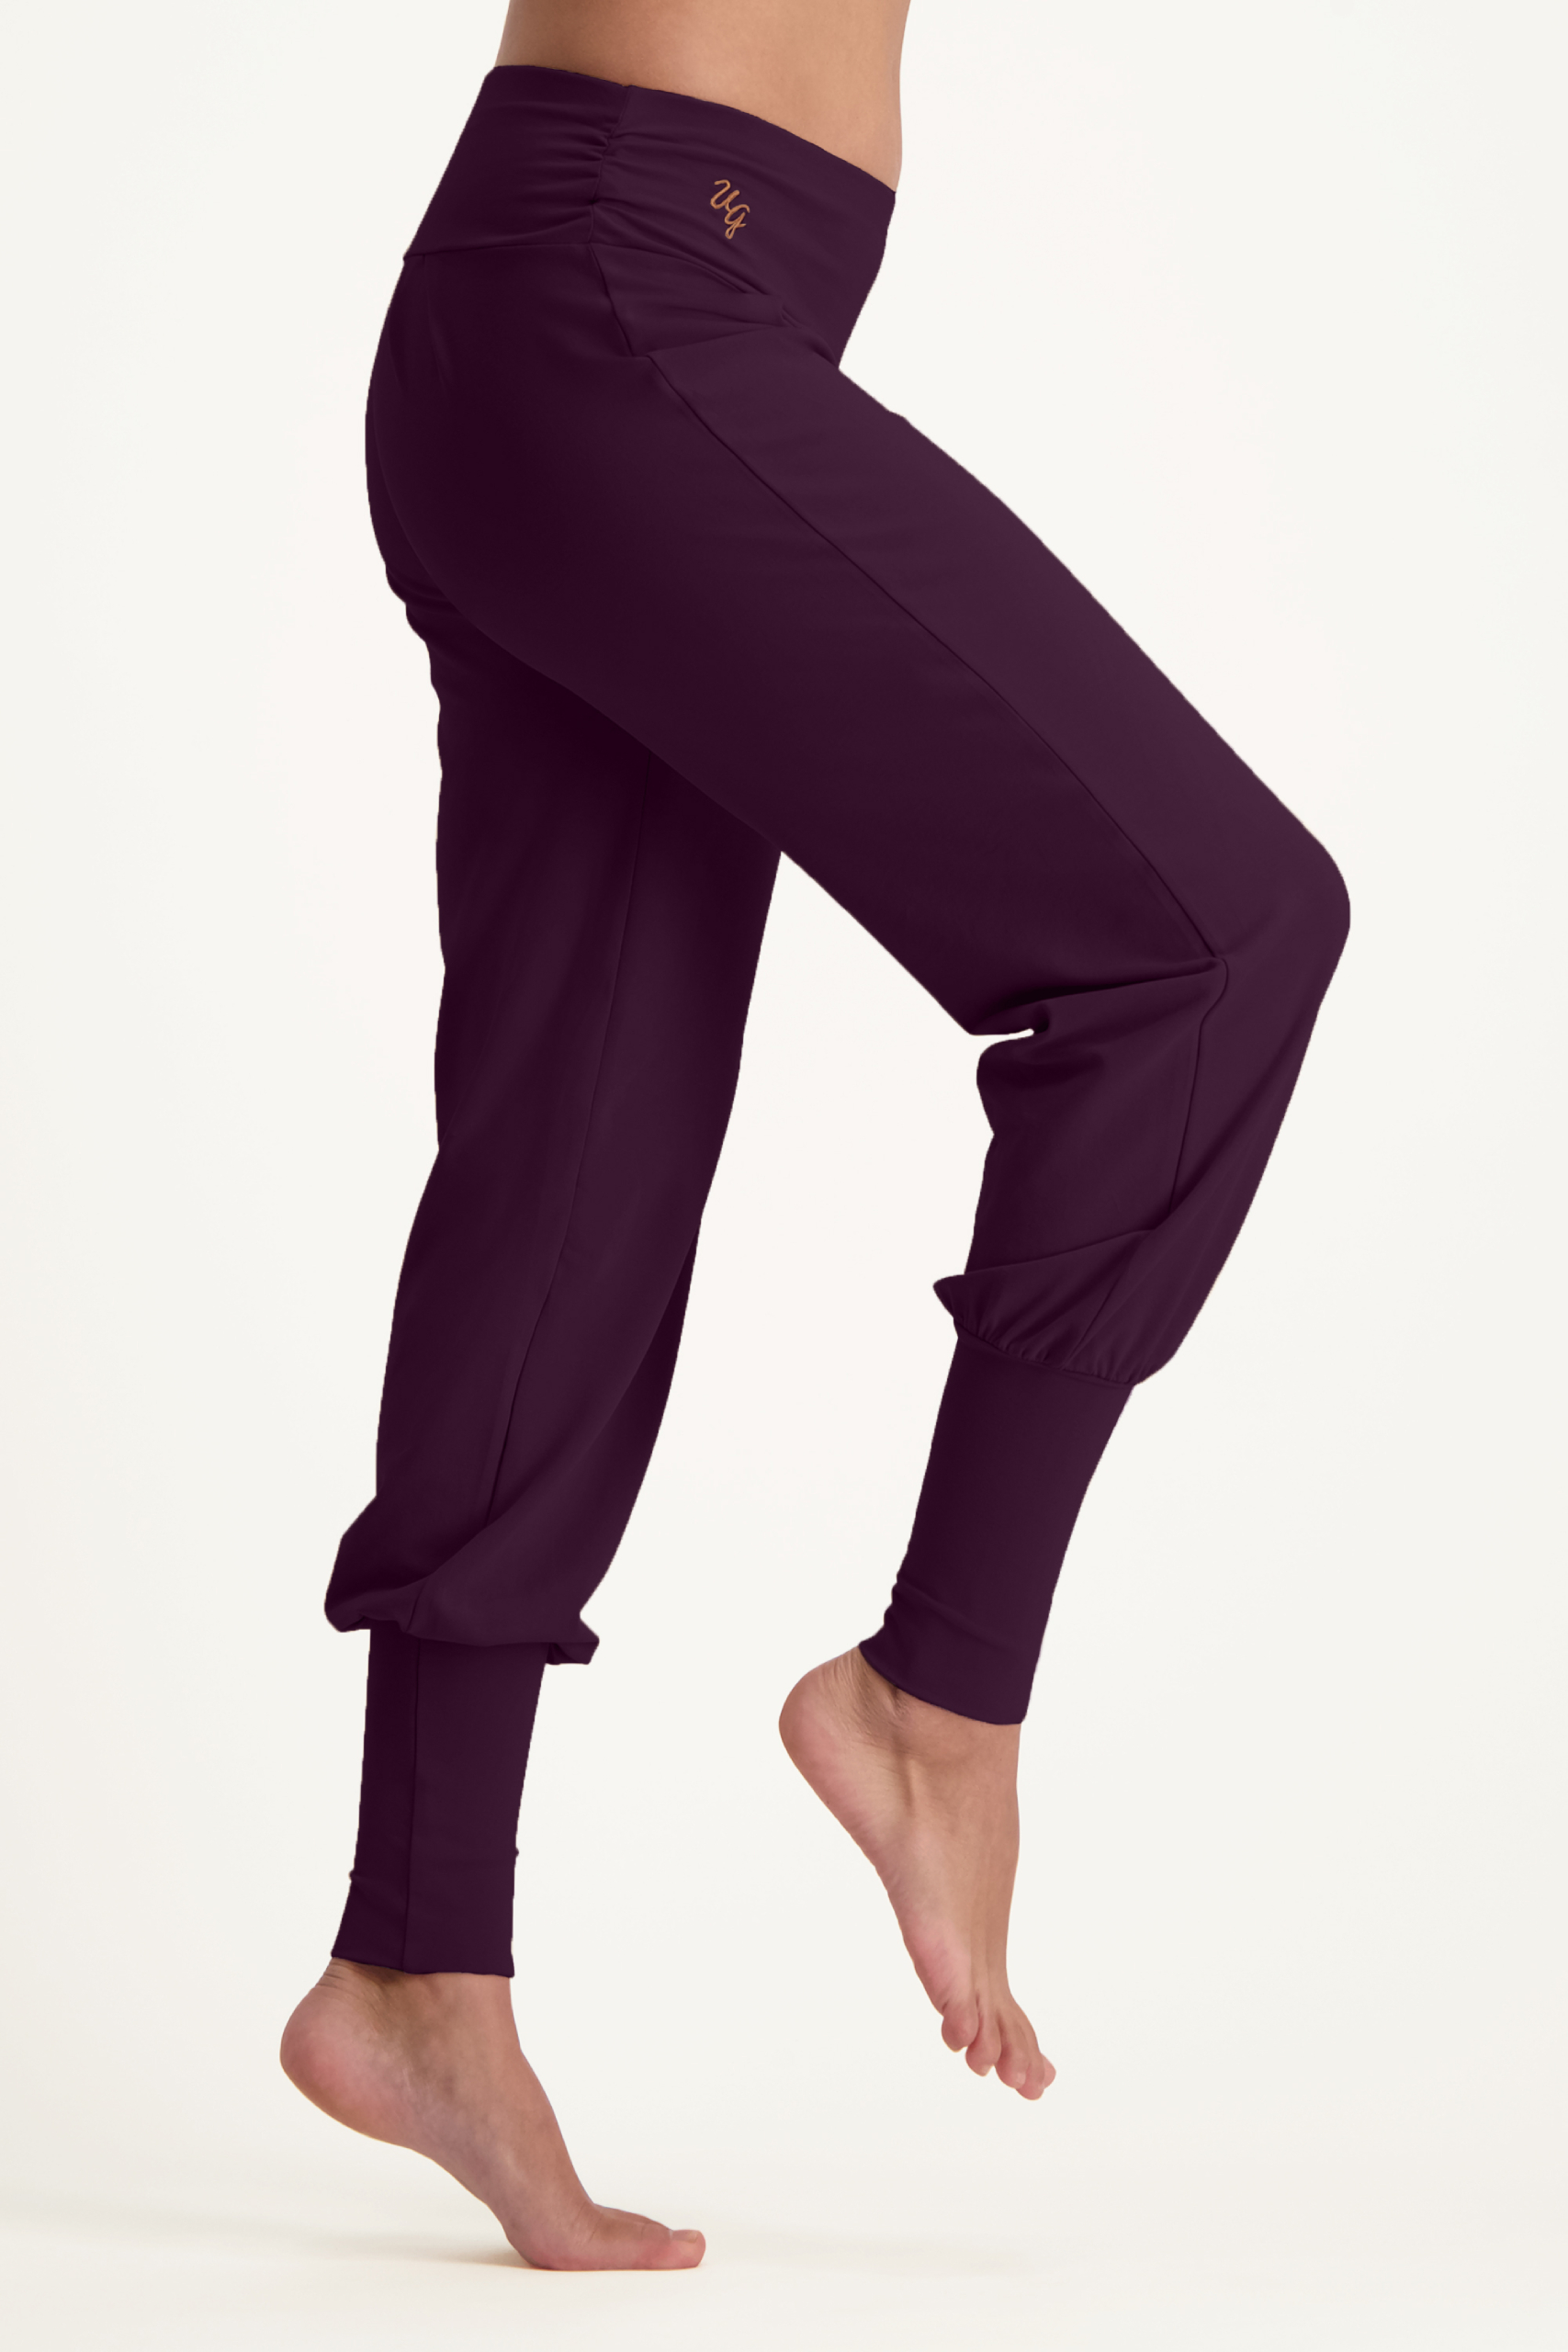 Yoga bottoms, Leggings, pants & harembroeken